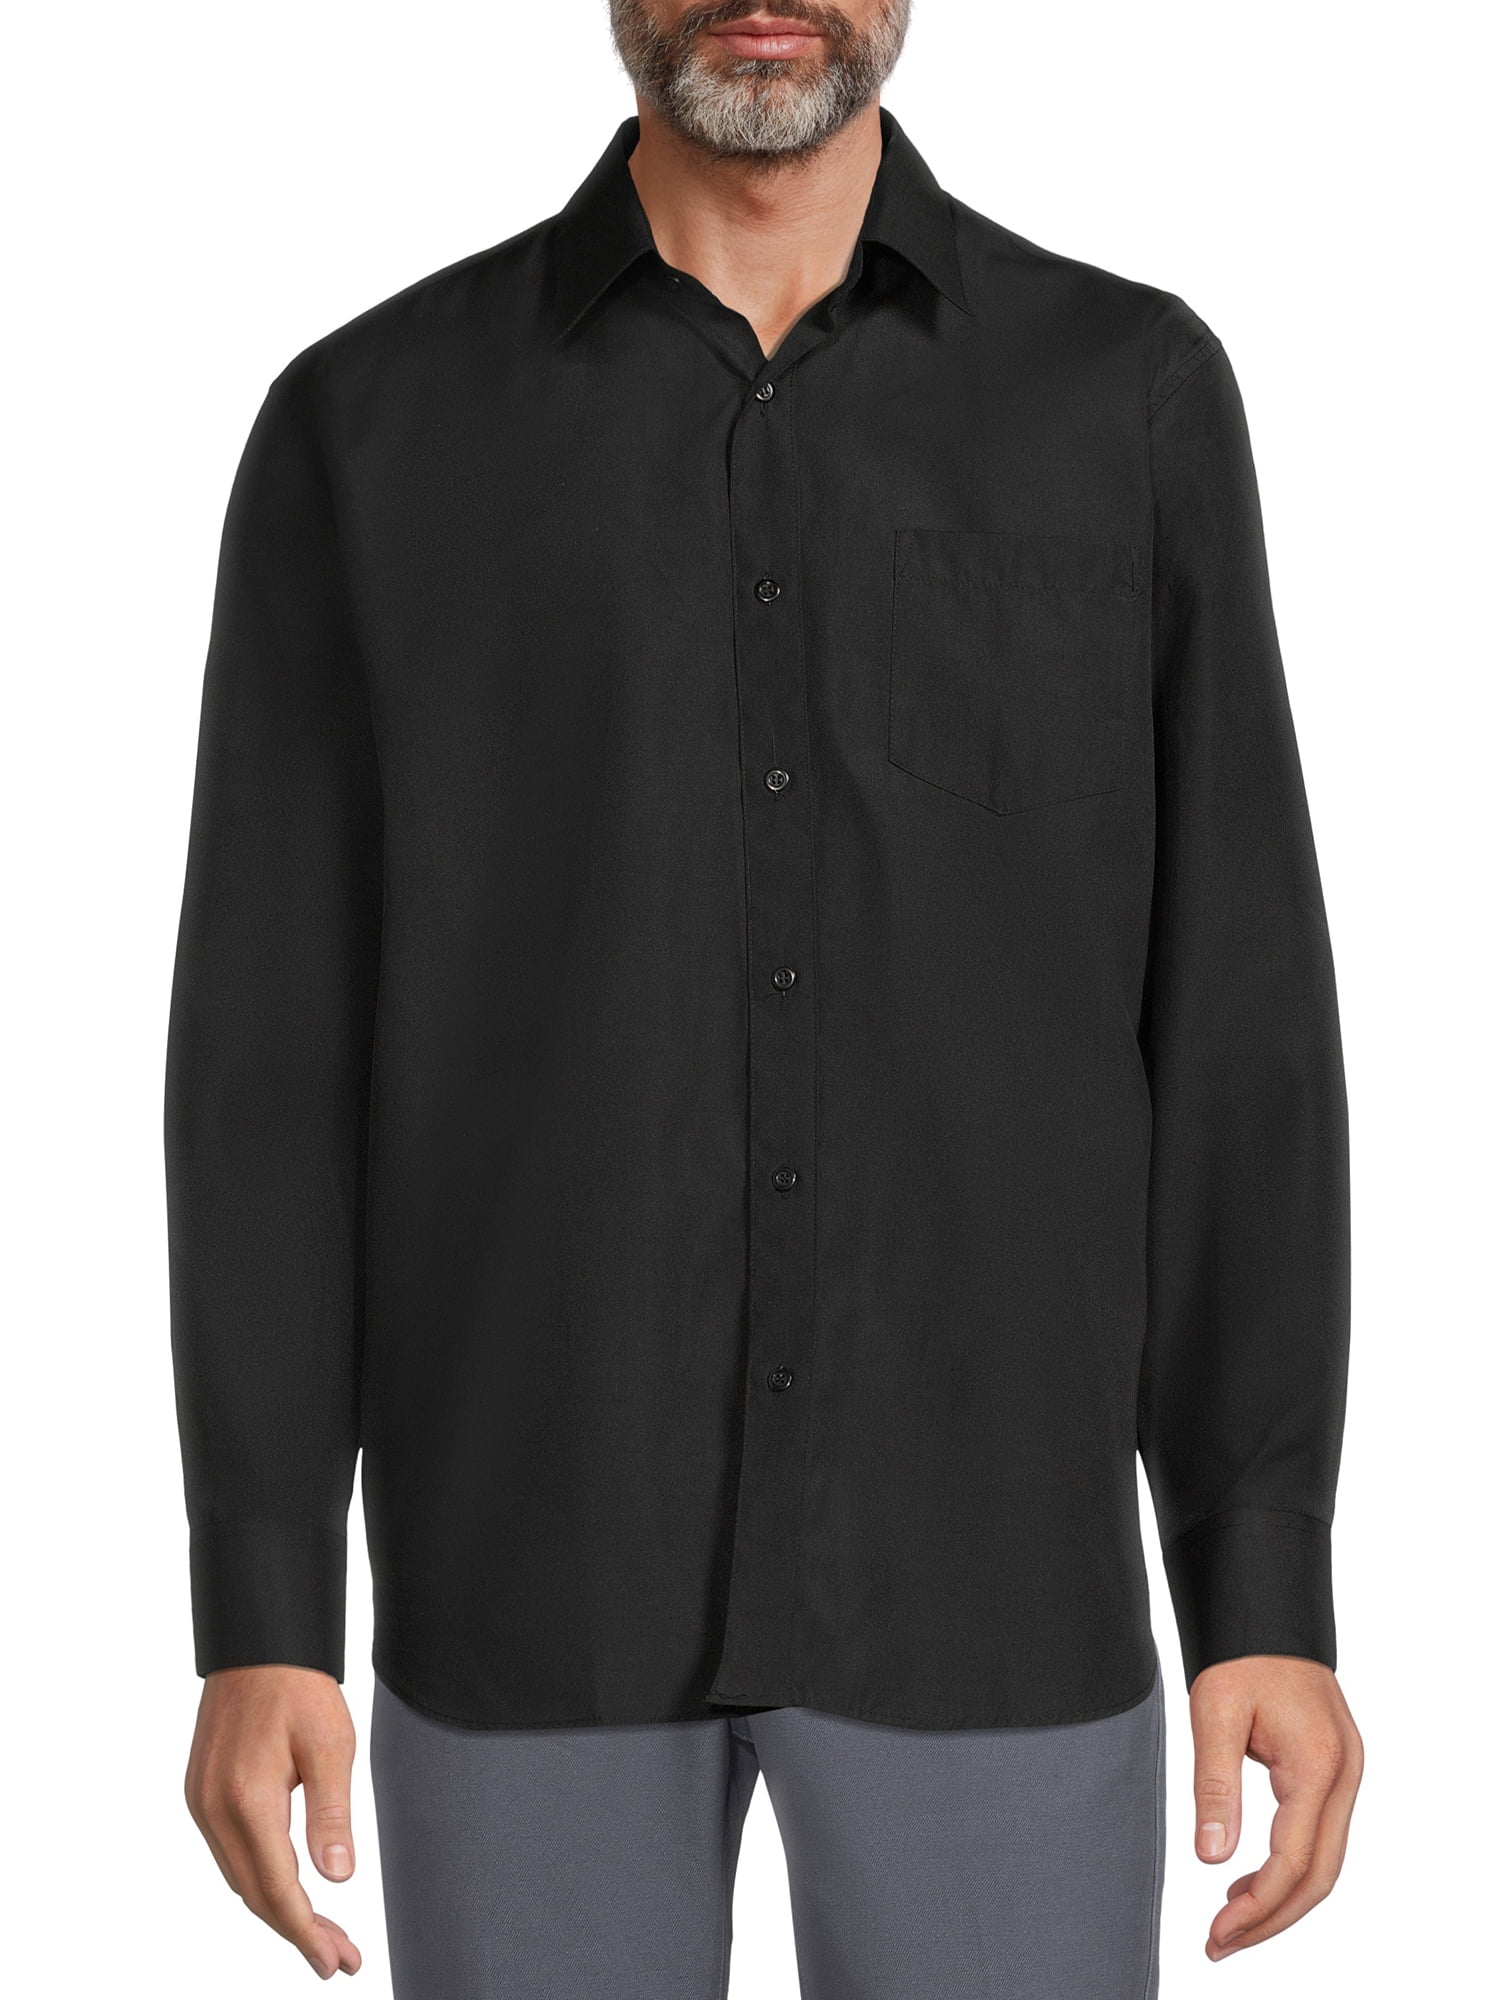 Silver Label Men's Black Dress Shirt, Size: Small